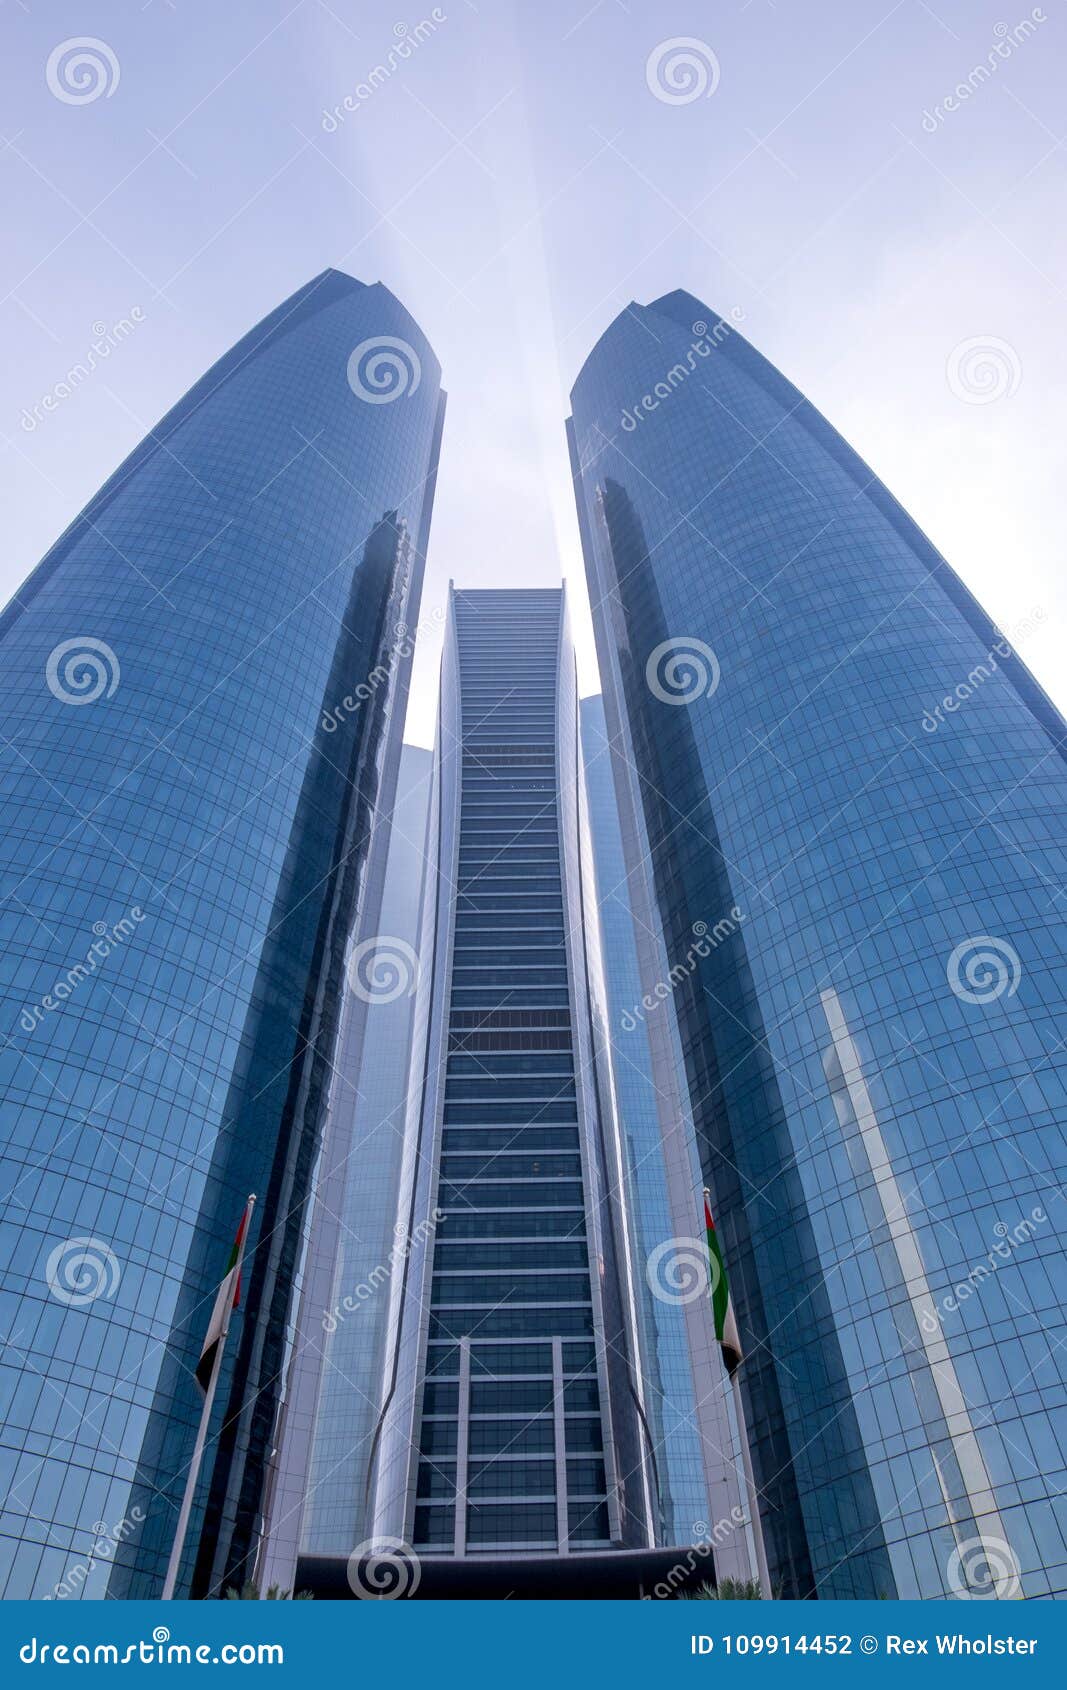 Skyscrapers In Abu Dhabi Near The Corniche Stock Photo Image Of